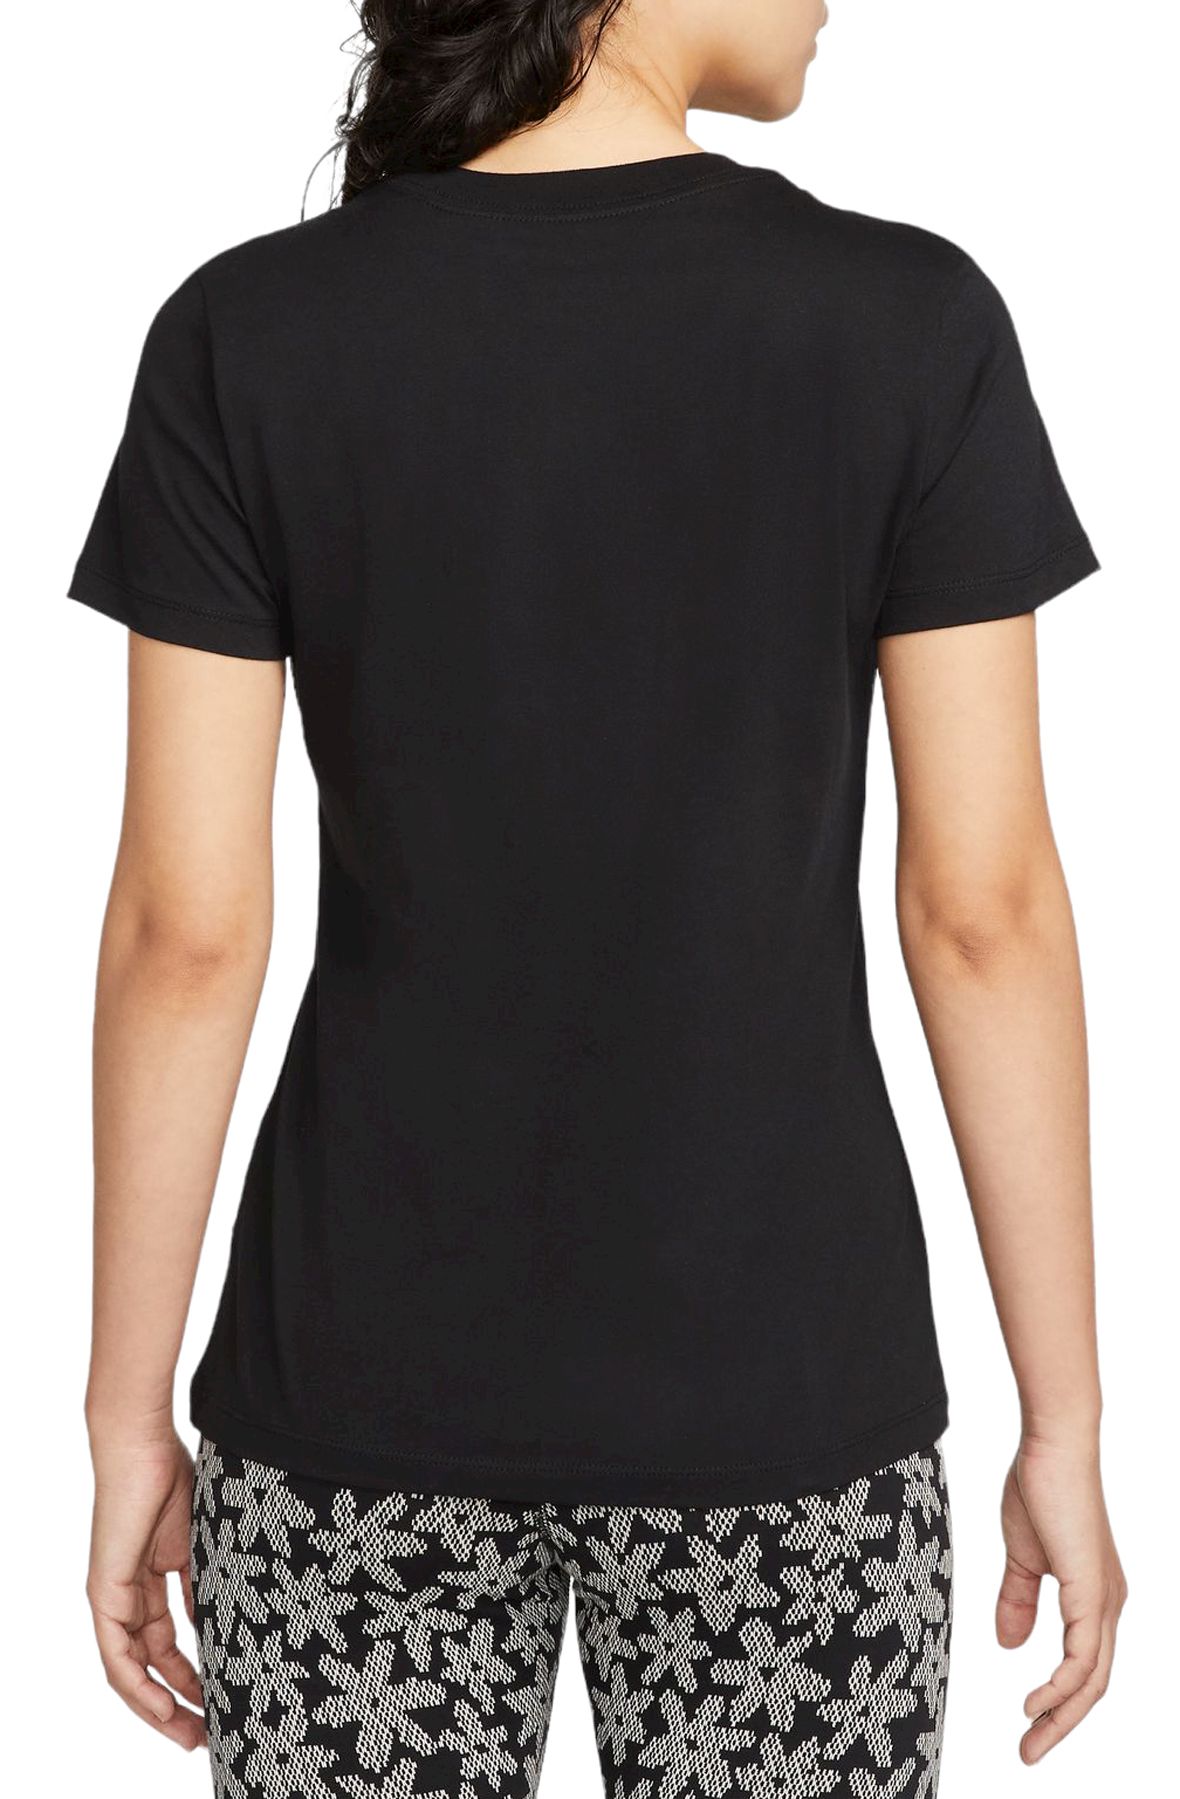 Women's T-shirt Nike Ny Df Layer Ss Top black CJ9326 010 CJ9326